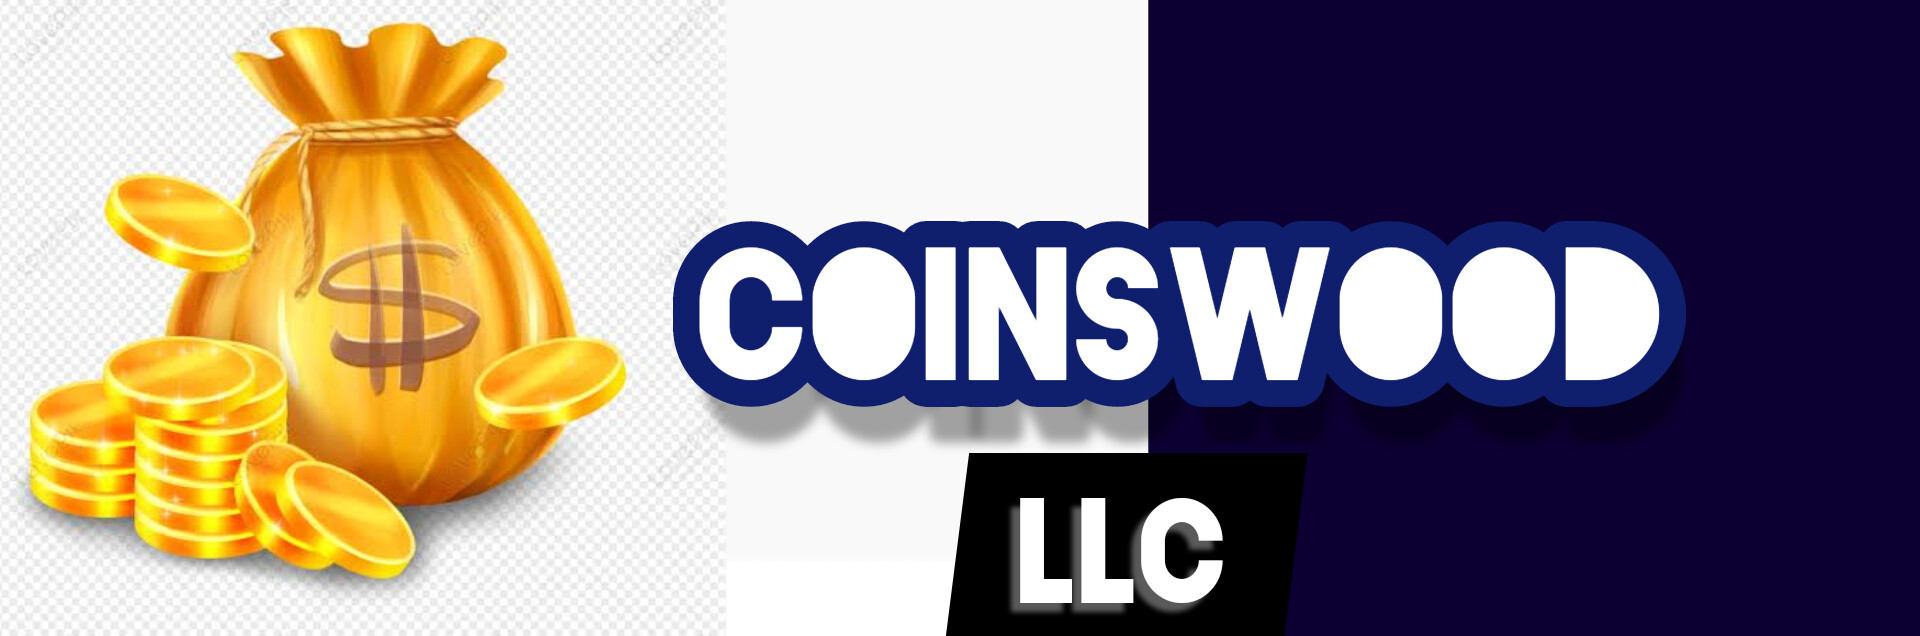 Coinswood LLC